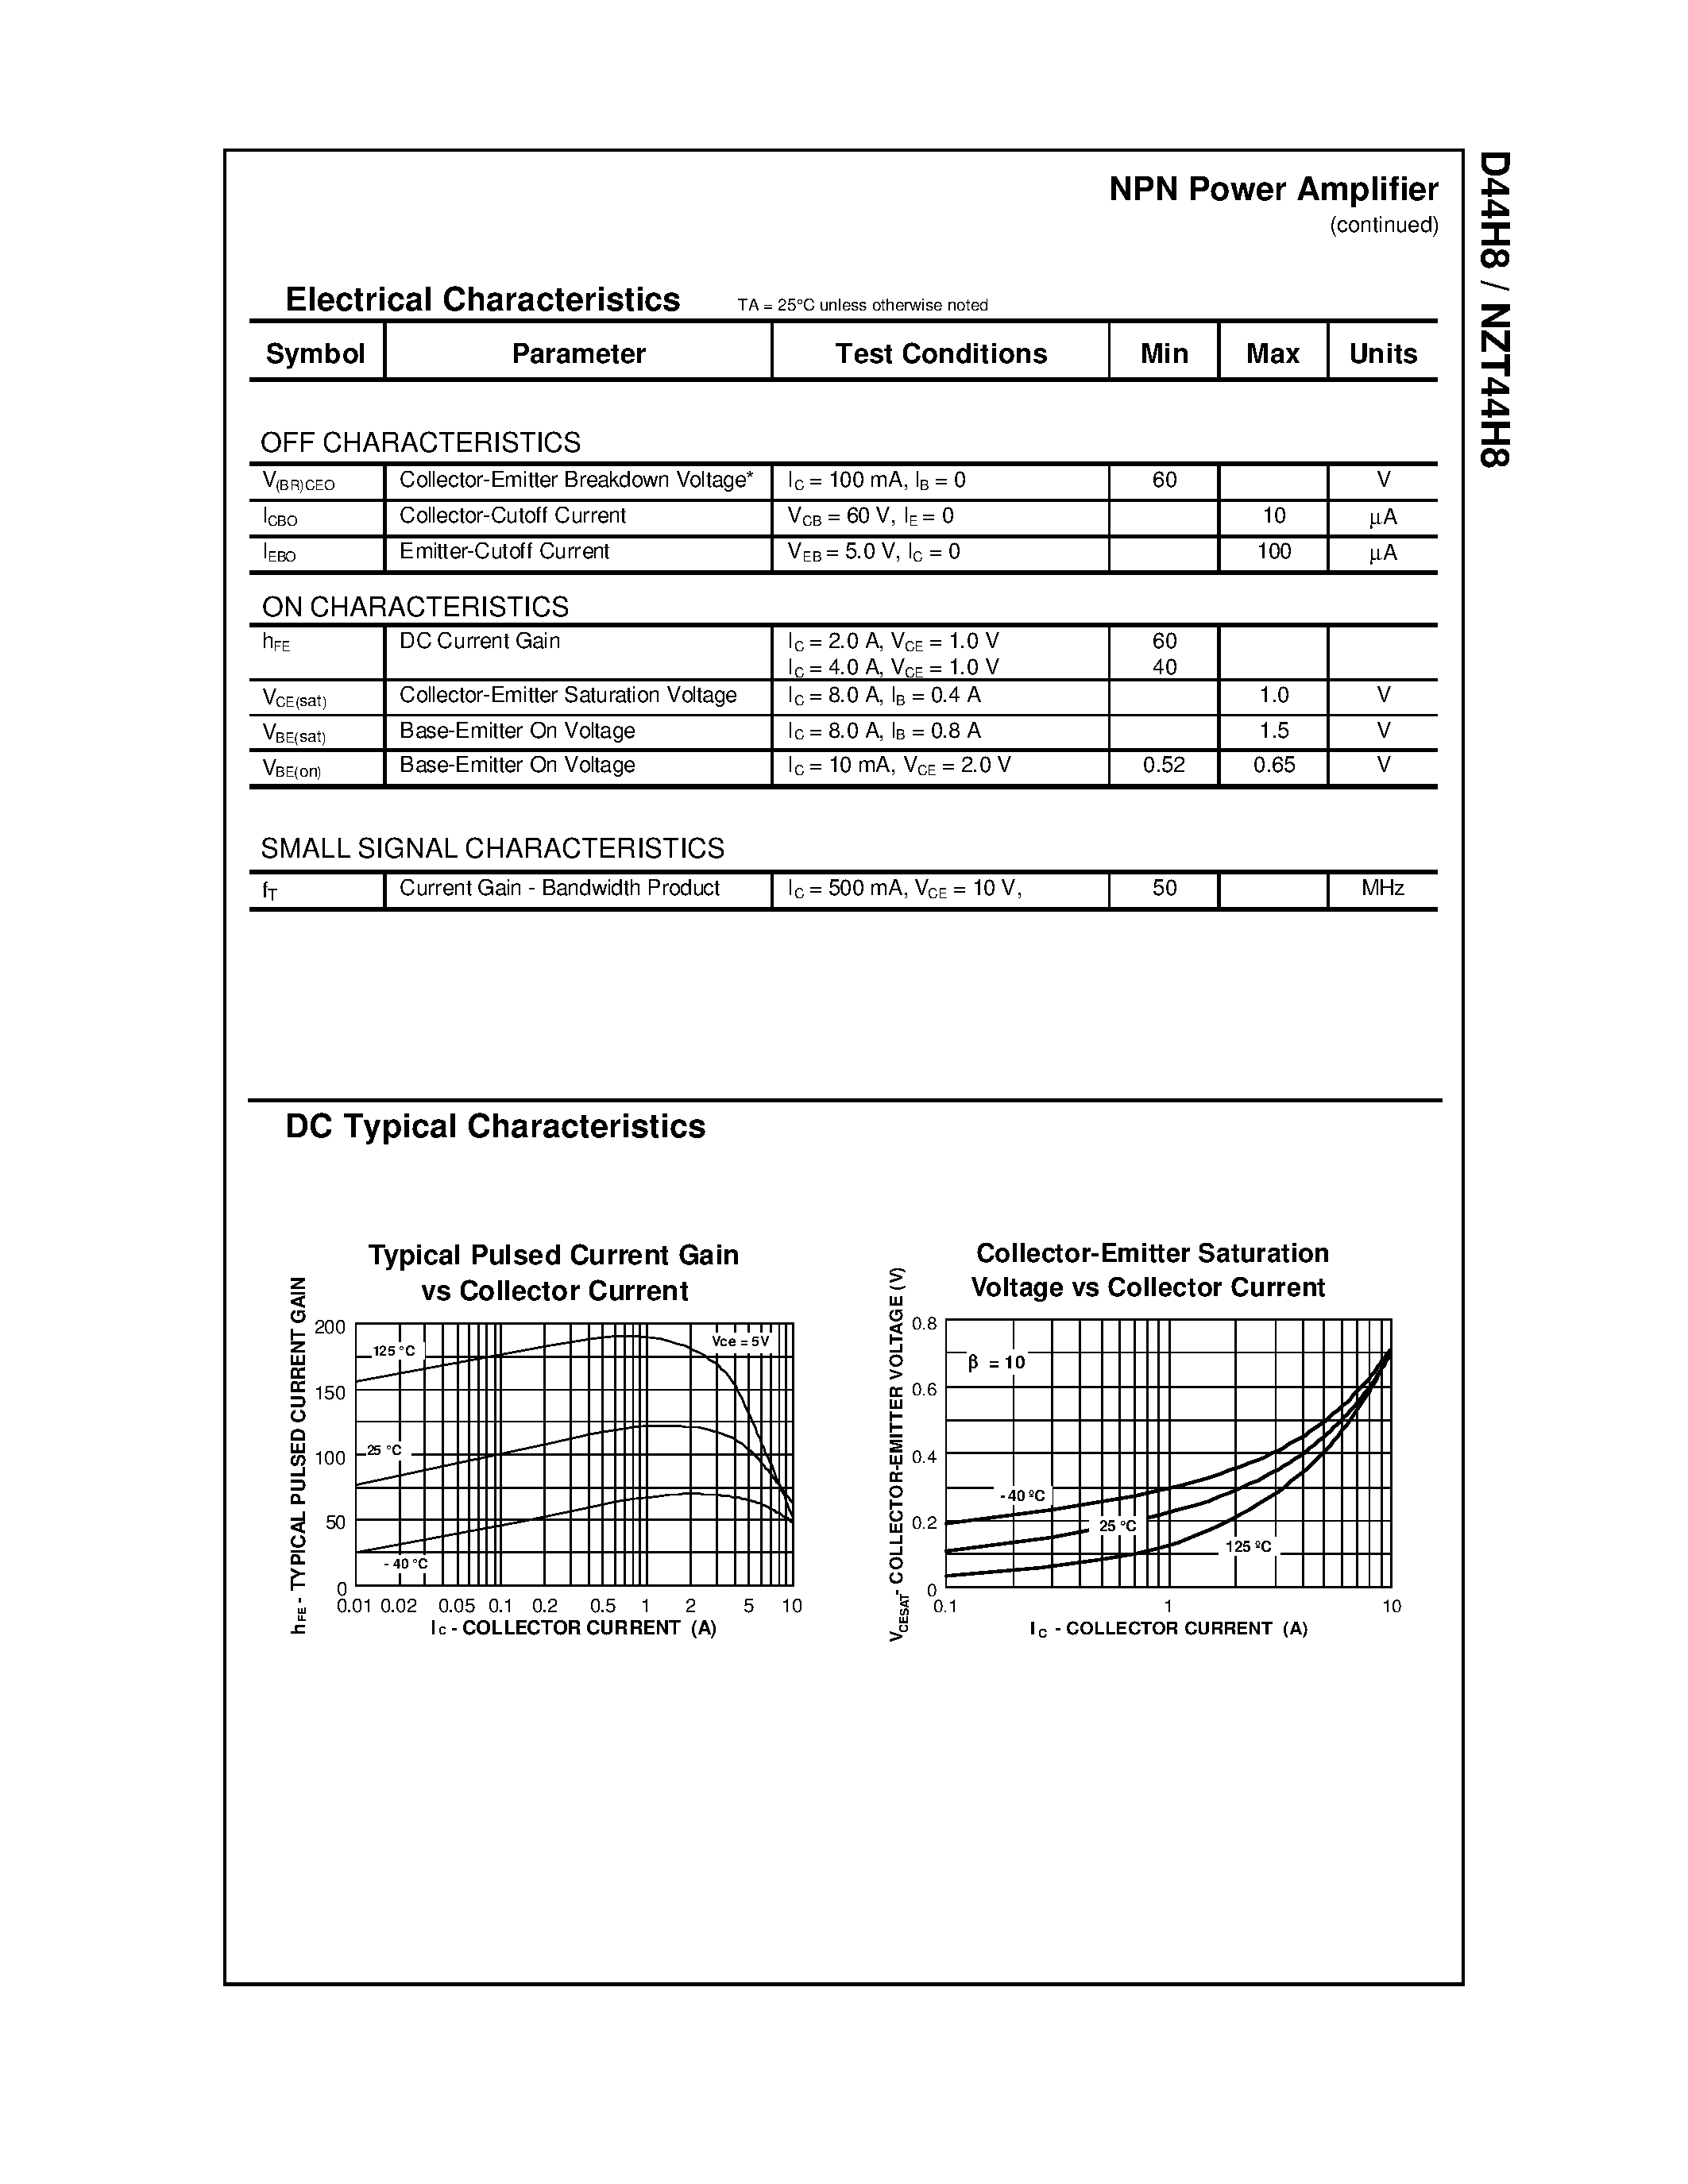 Datasheet NZT44H8 - NPN Power Amplifier page 2